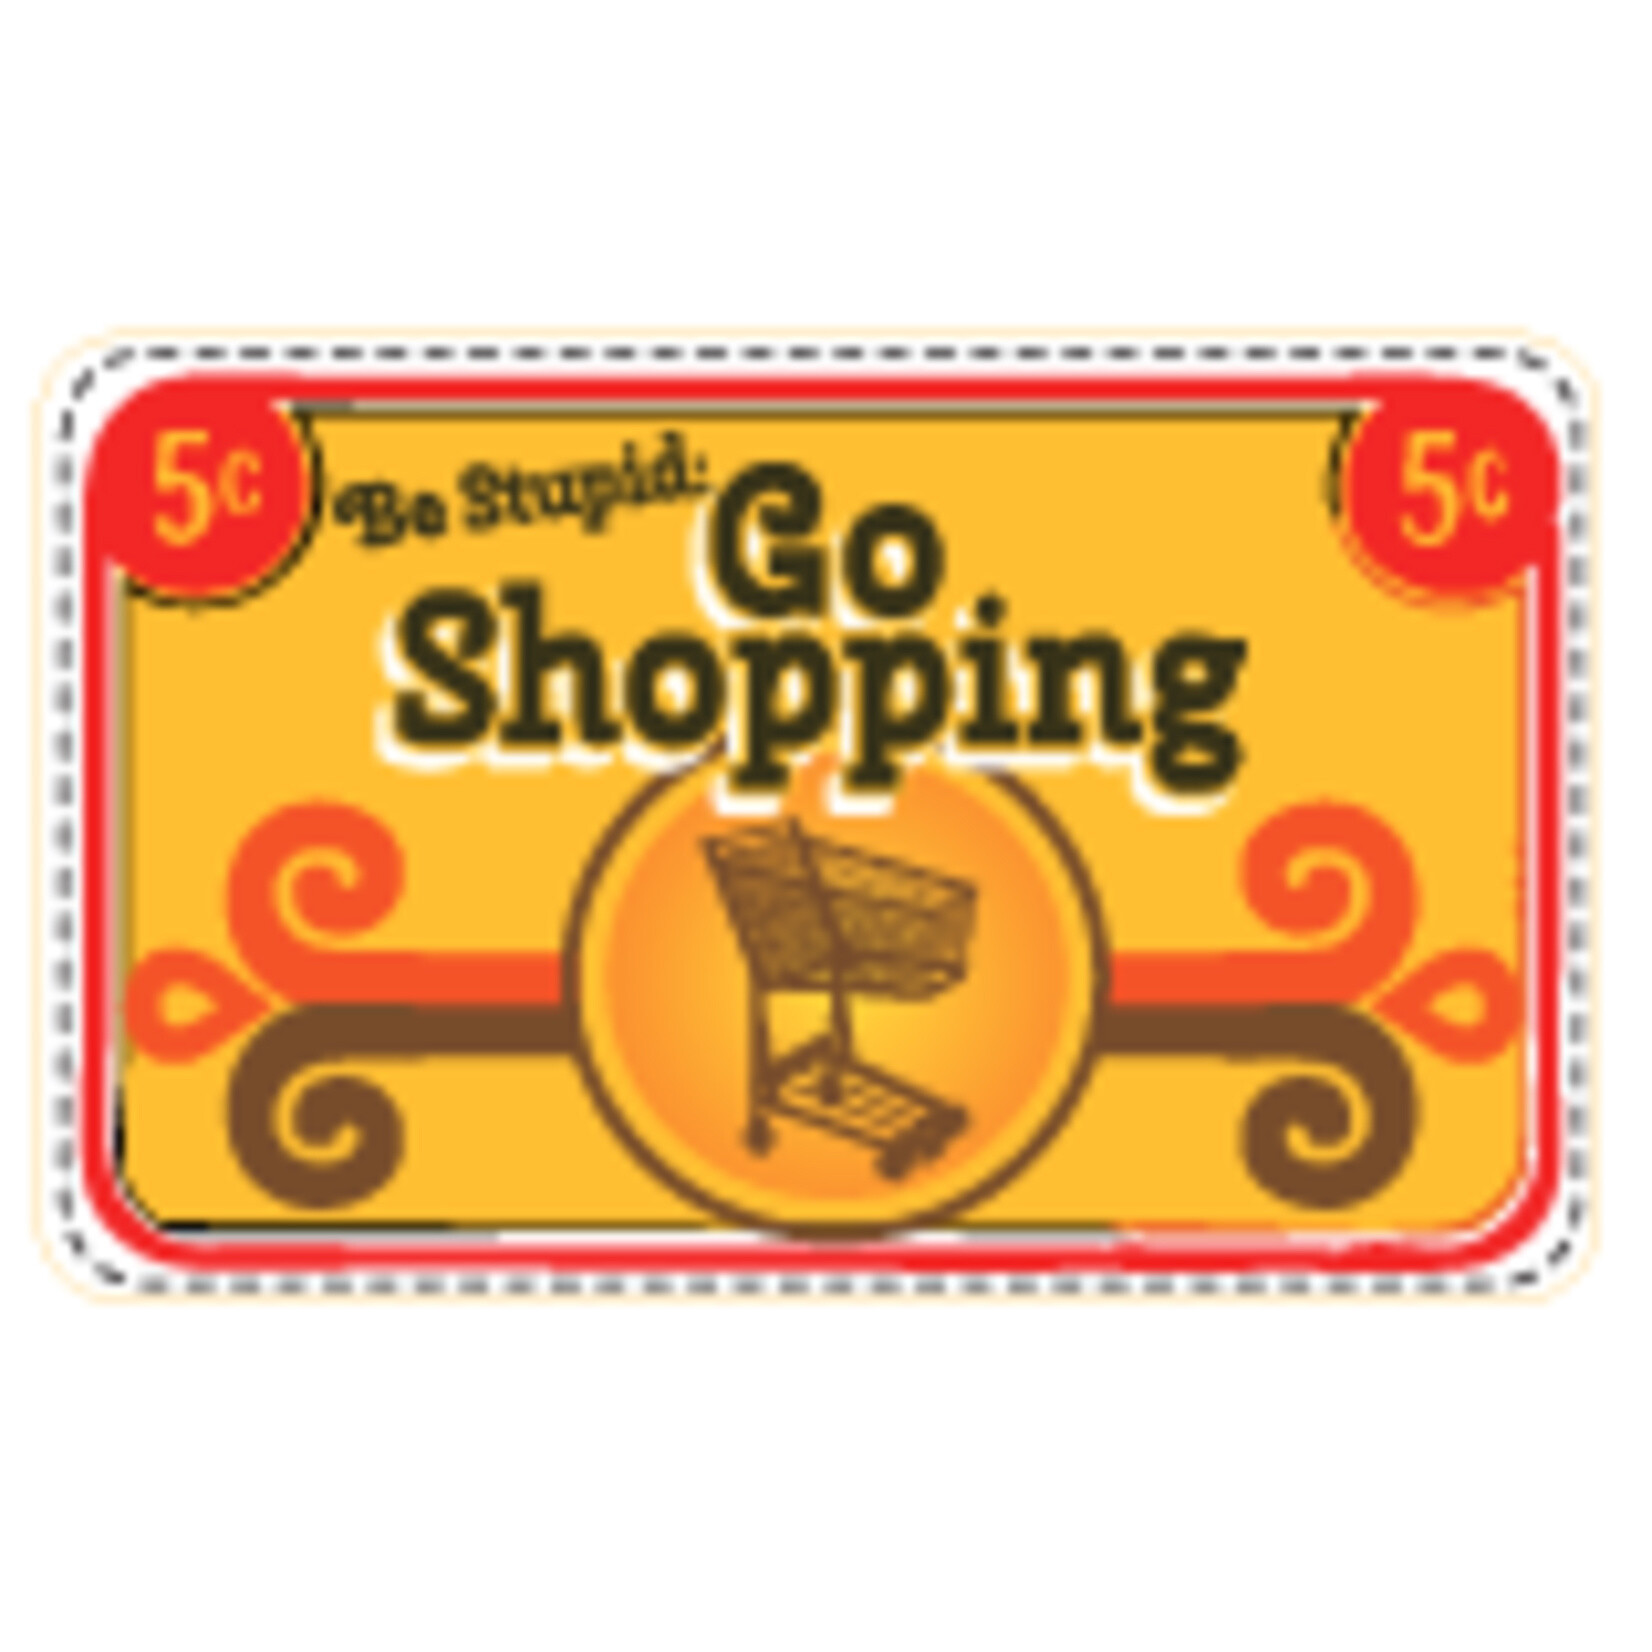 Sticker - Be Stupid: Go Shopping